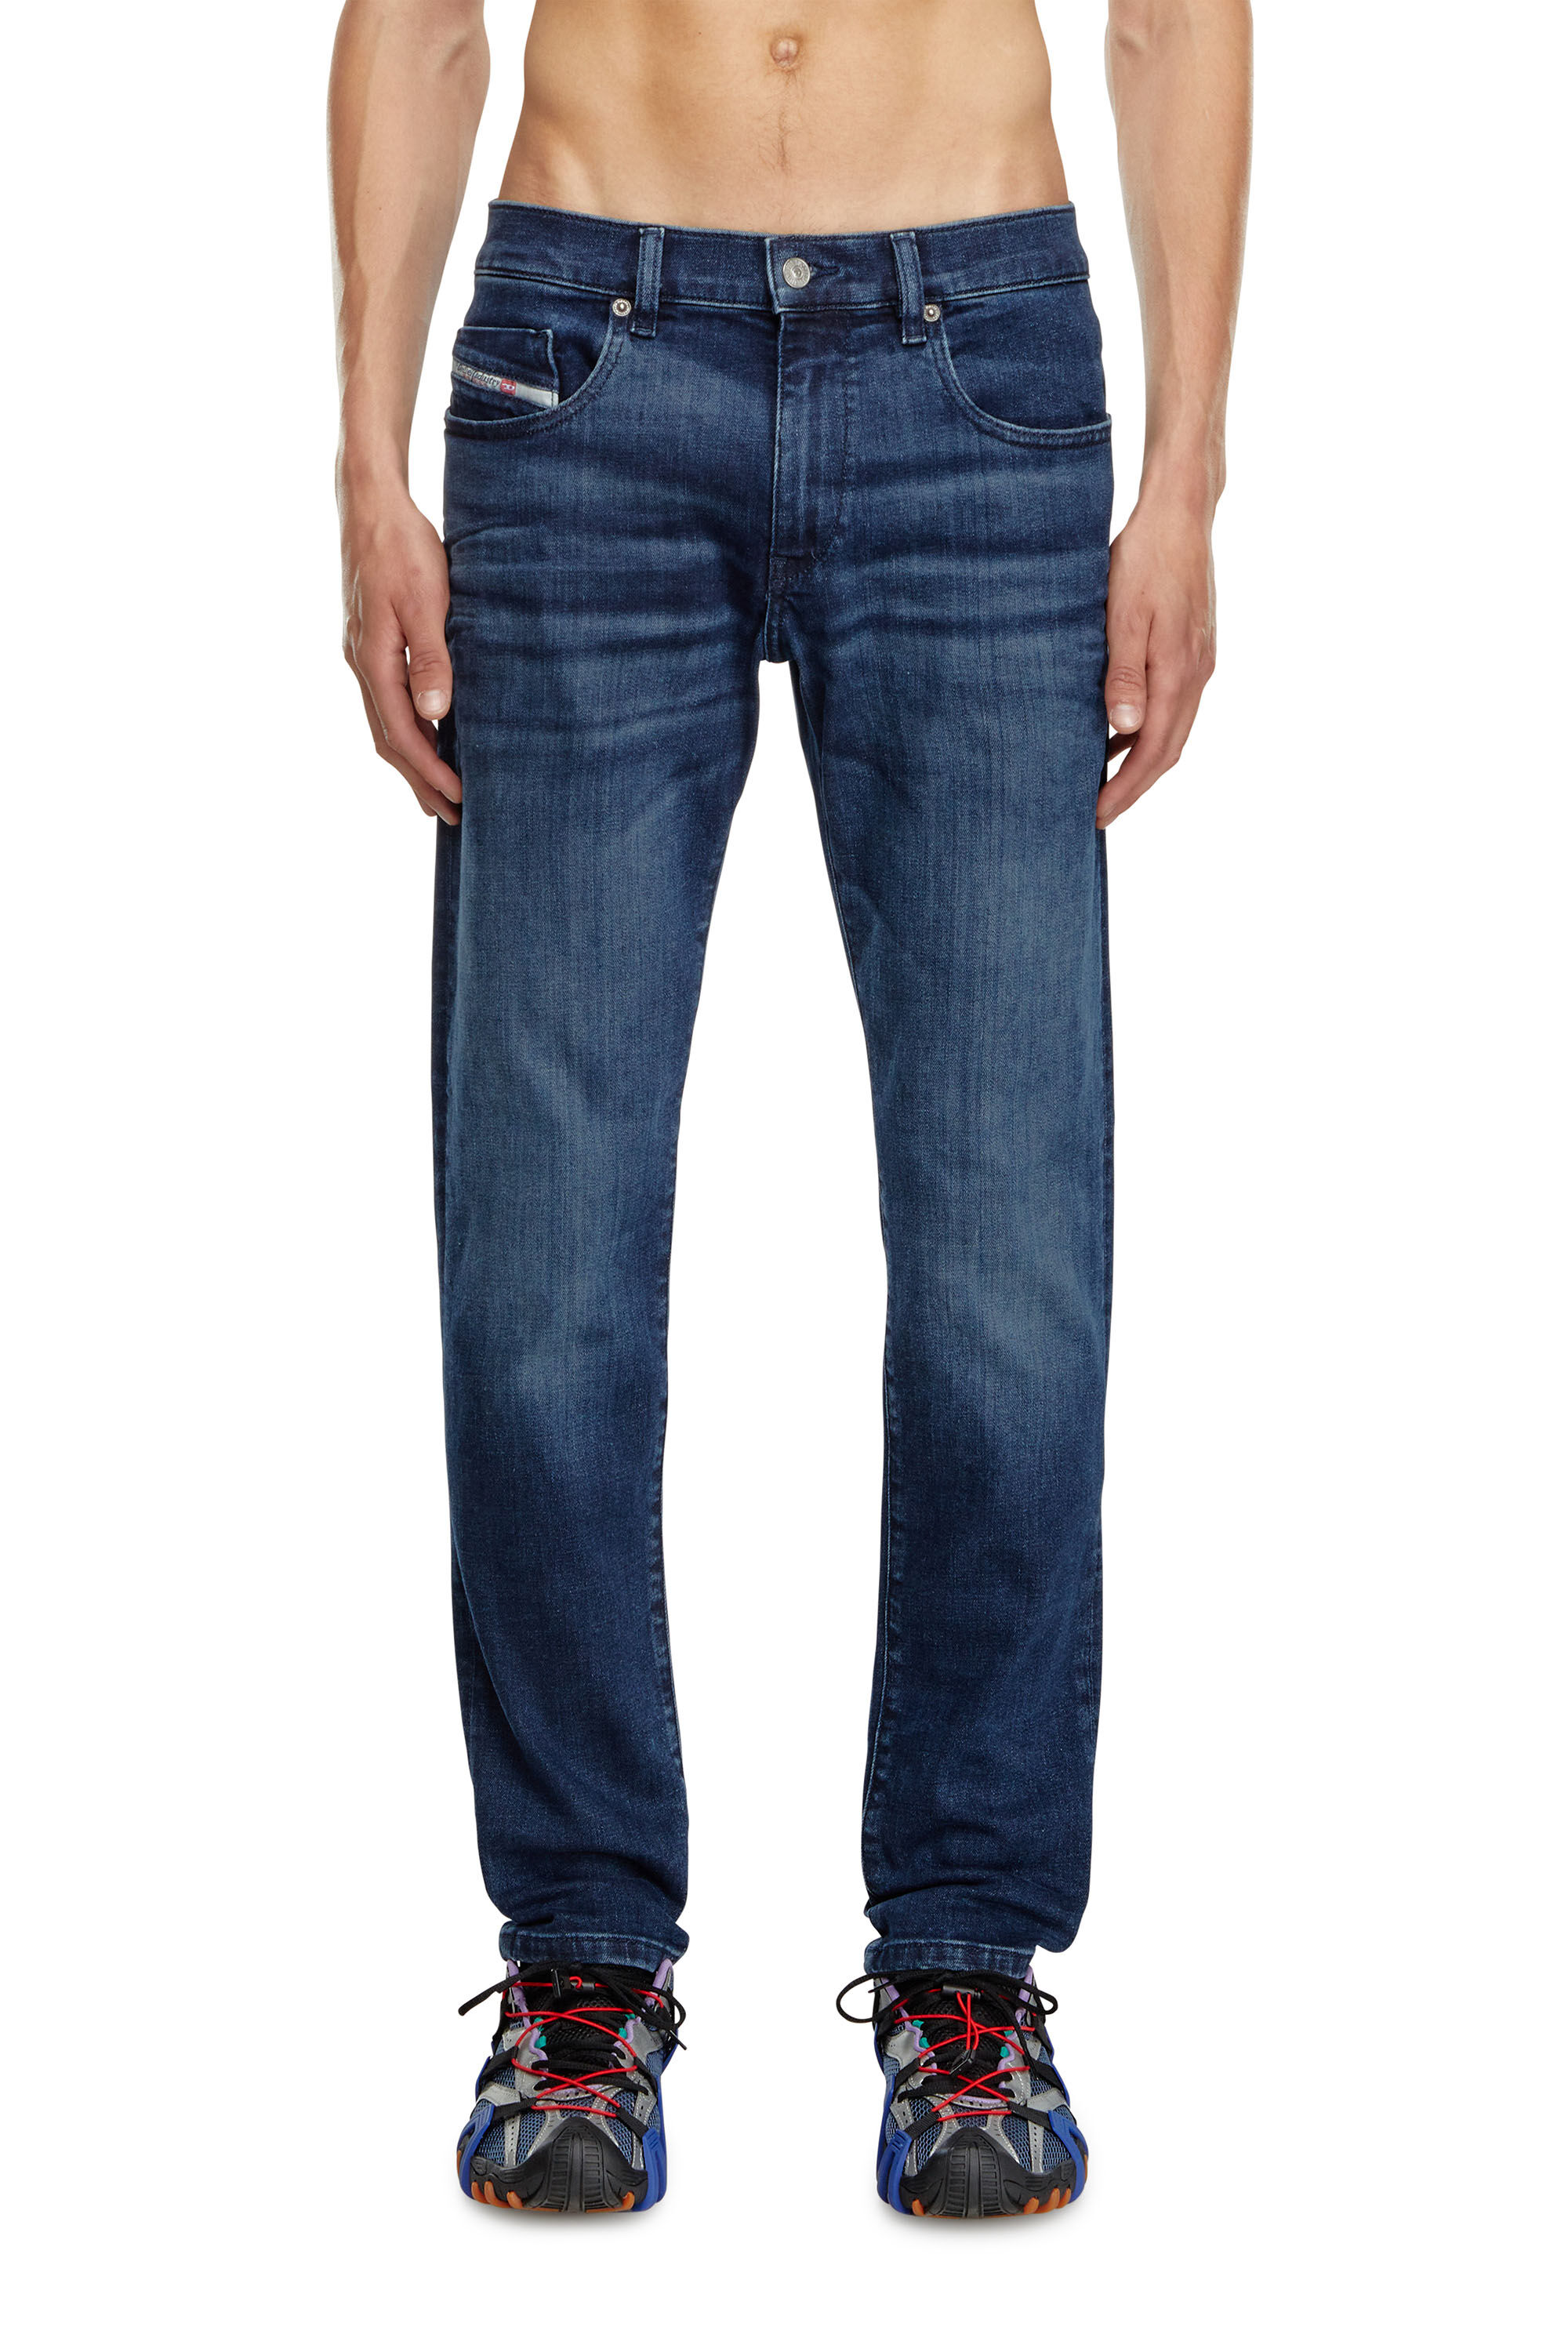 Diesel - Slim Jeans 2019 D-Strukt 0GRDJ, Hombre Slim Jeans - 2019 D-Strukt in Azul marino - Image 3